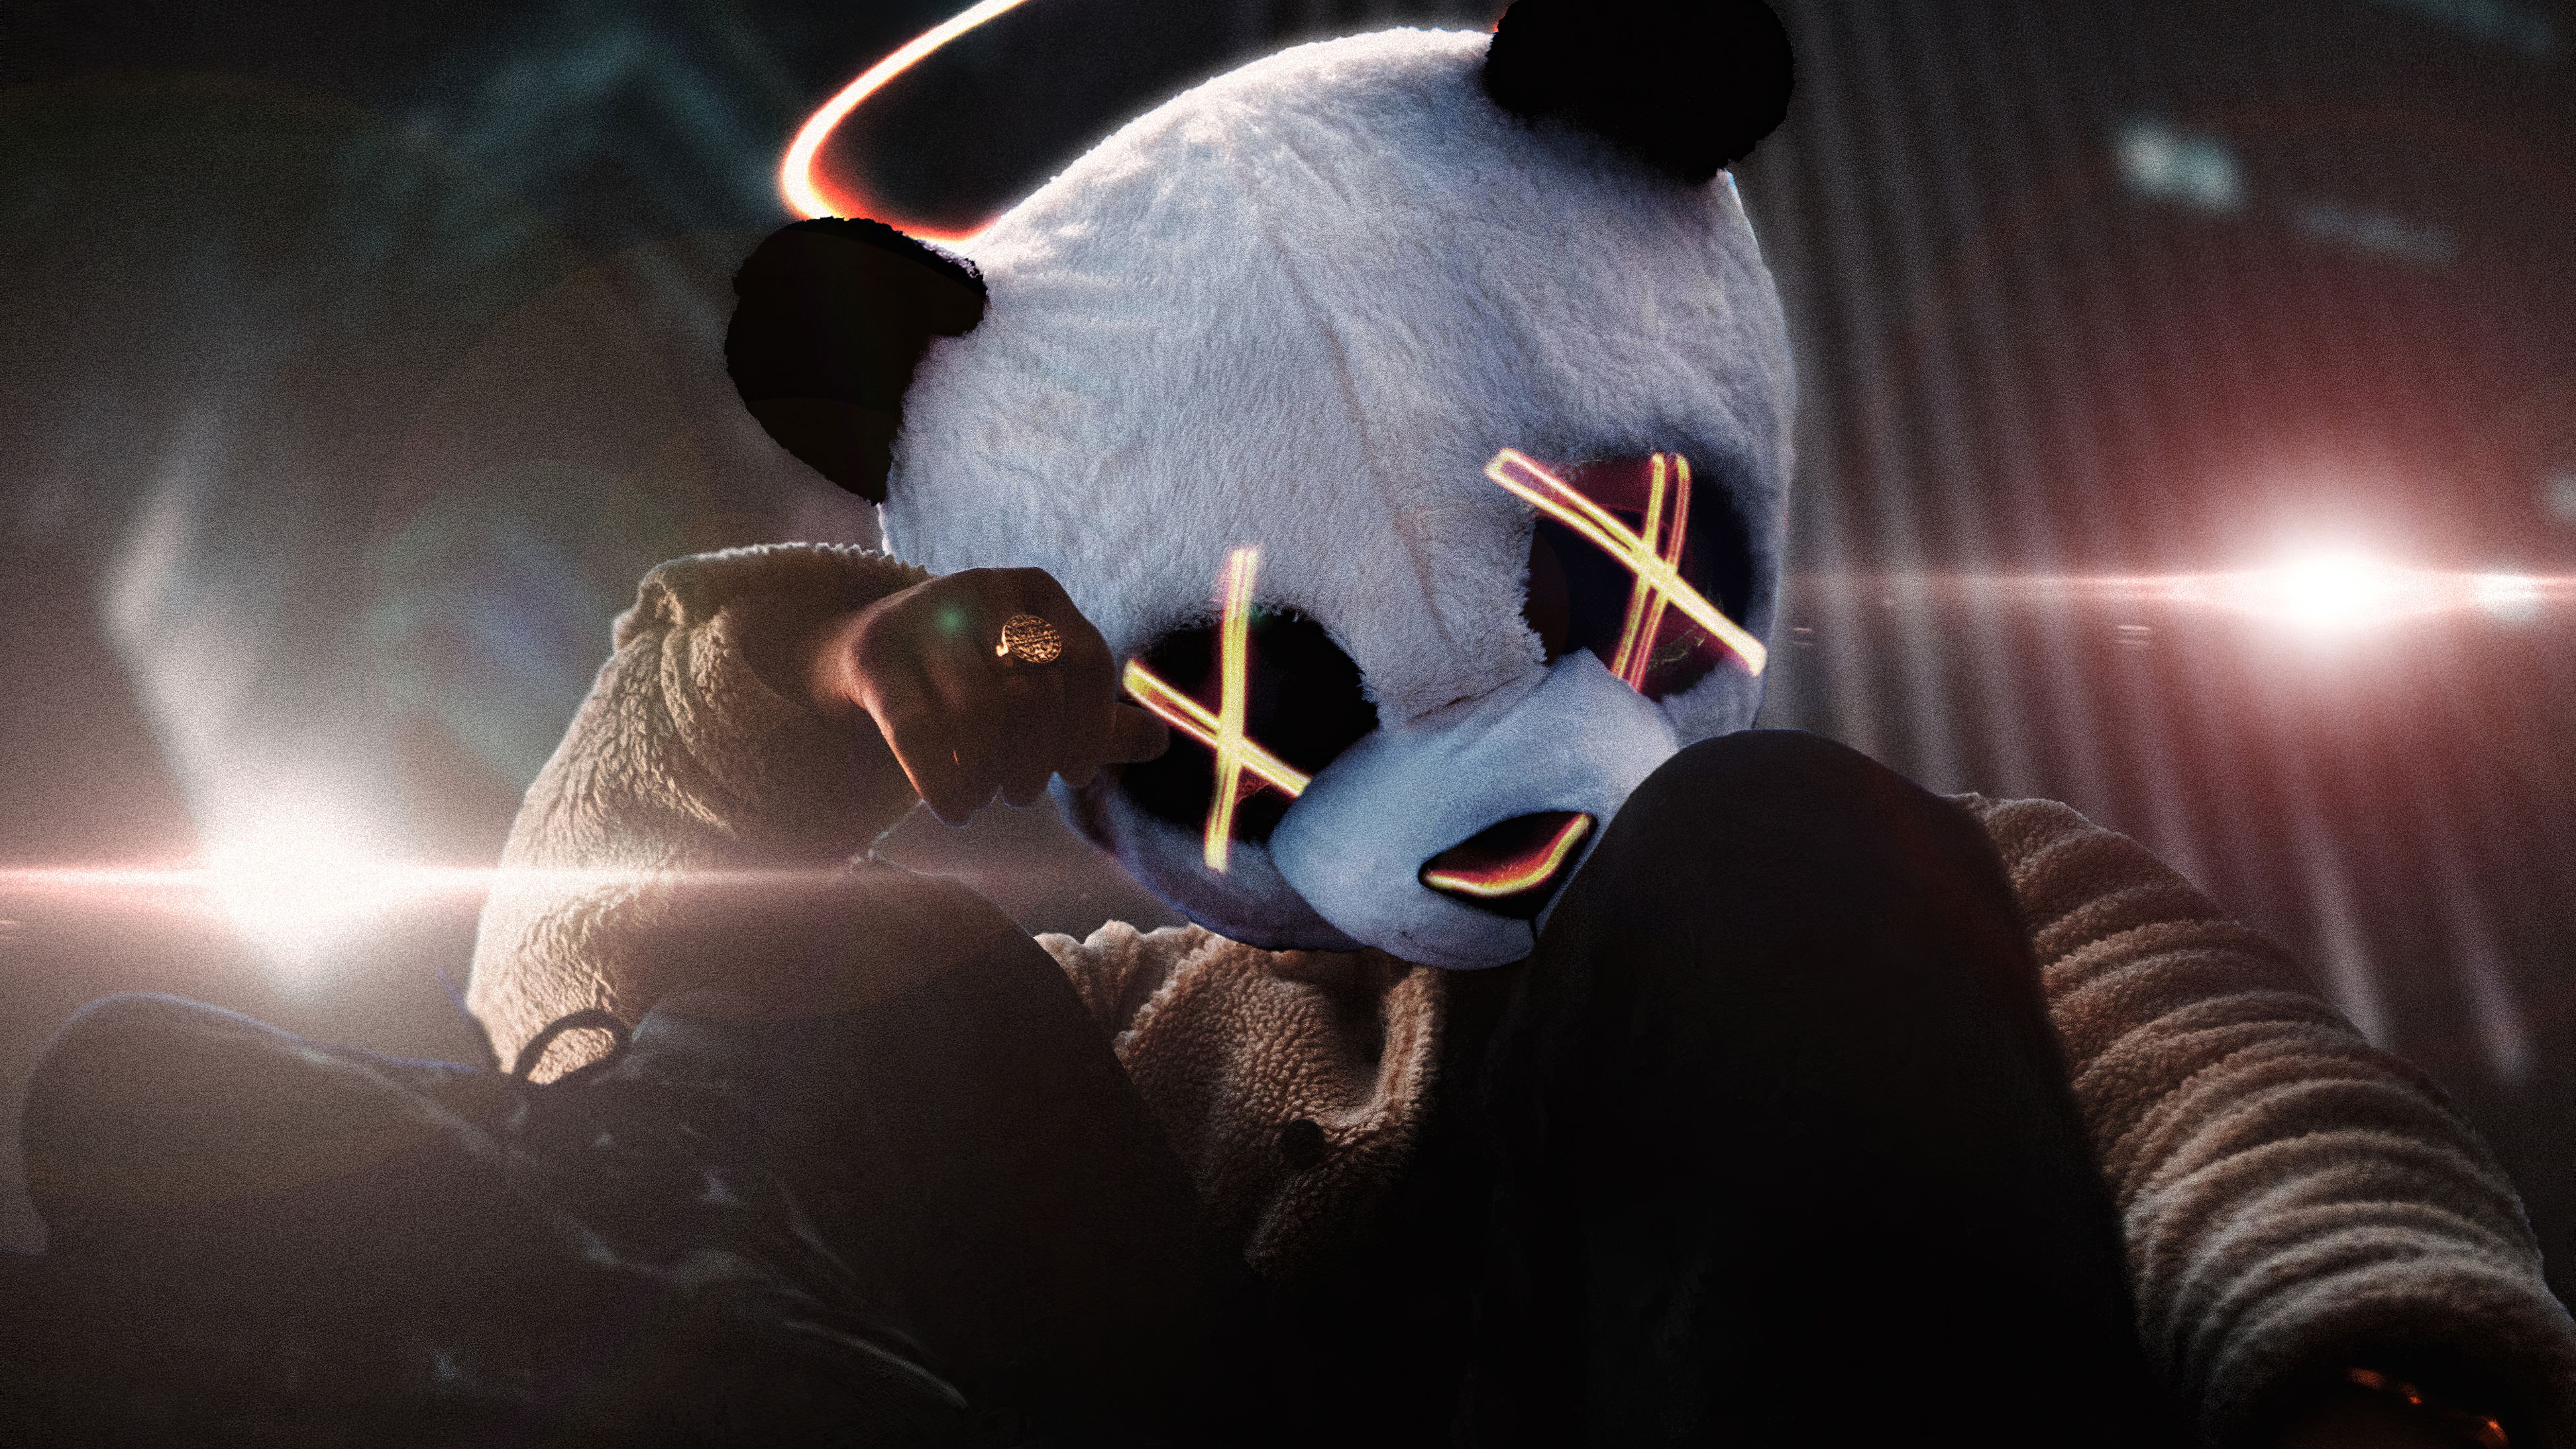 Mafia Panda 4k, HD Artist, 4k Wallpaper, Image, Background